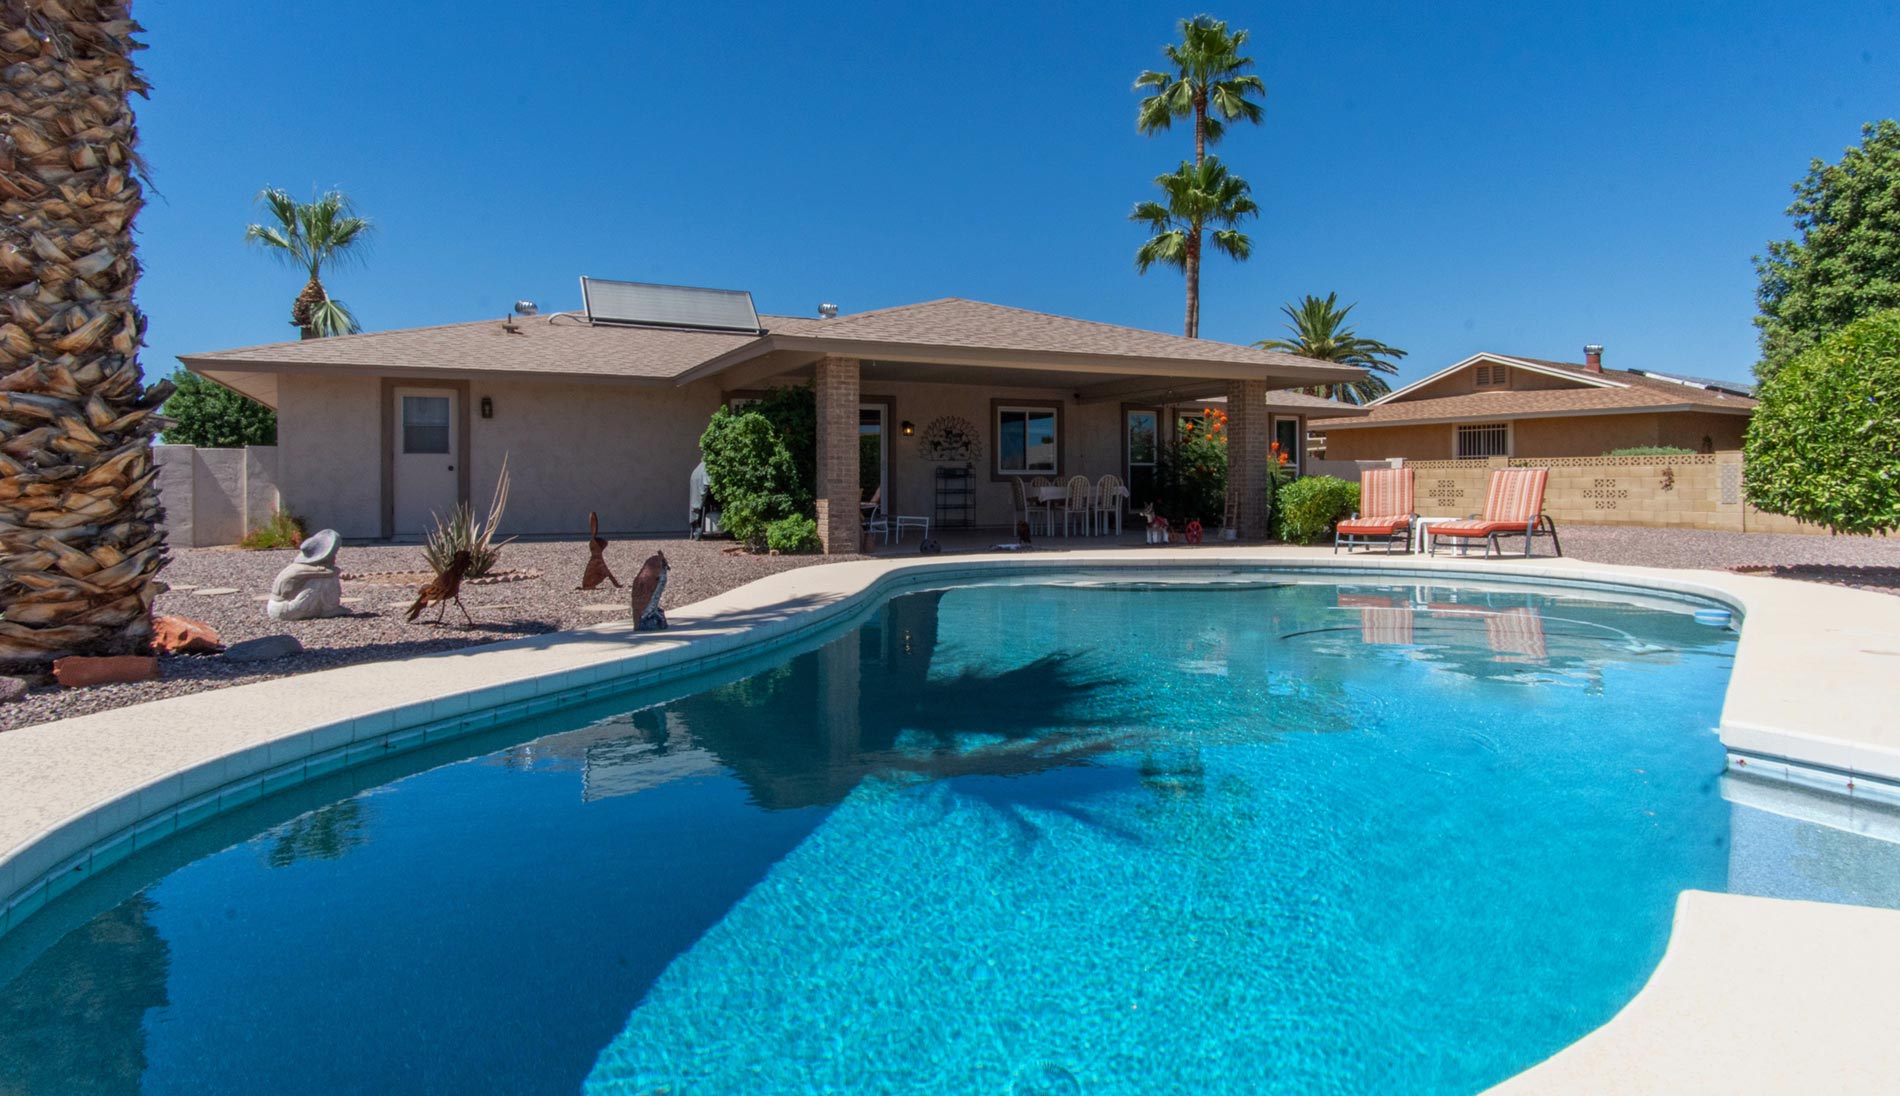 Pool and Home in Arizona